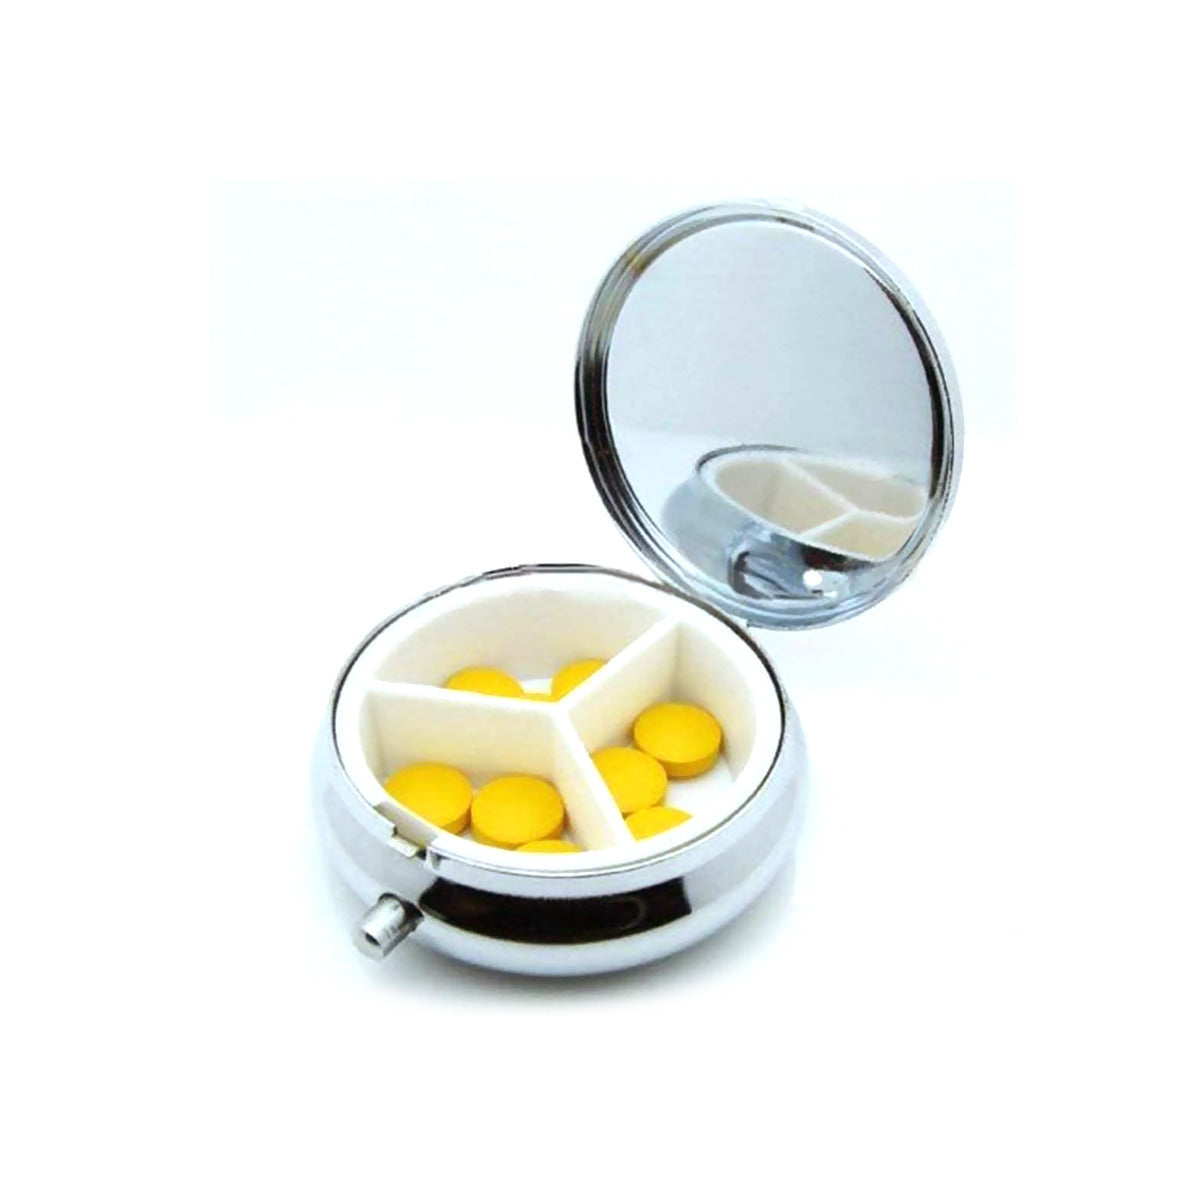 Pocket- sized medicine or snuff box